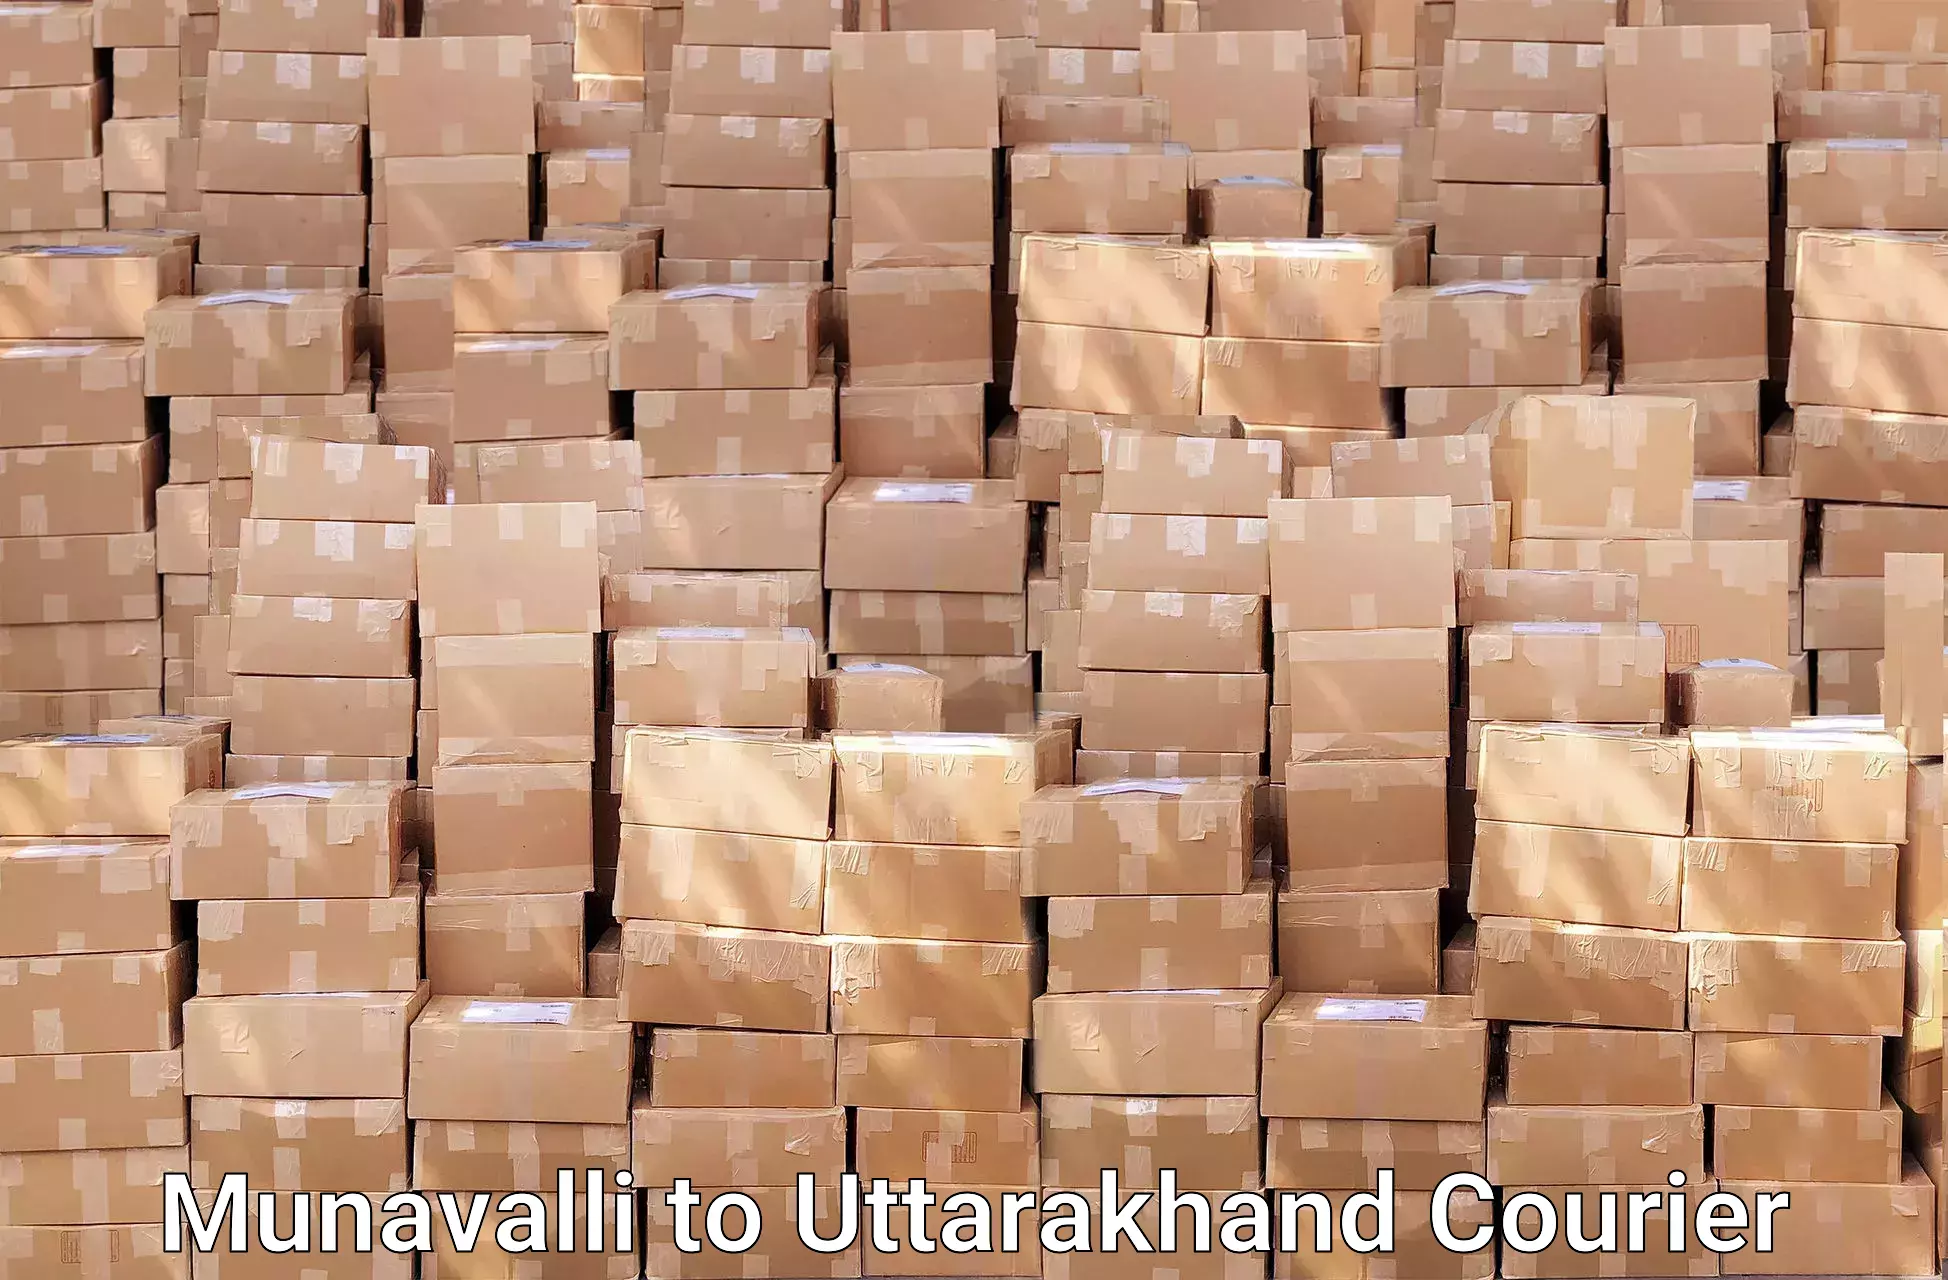 Moving and storage services in Munavalli to Uttarakhand